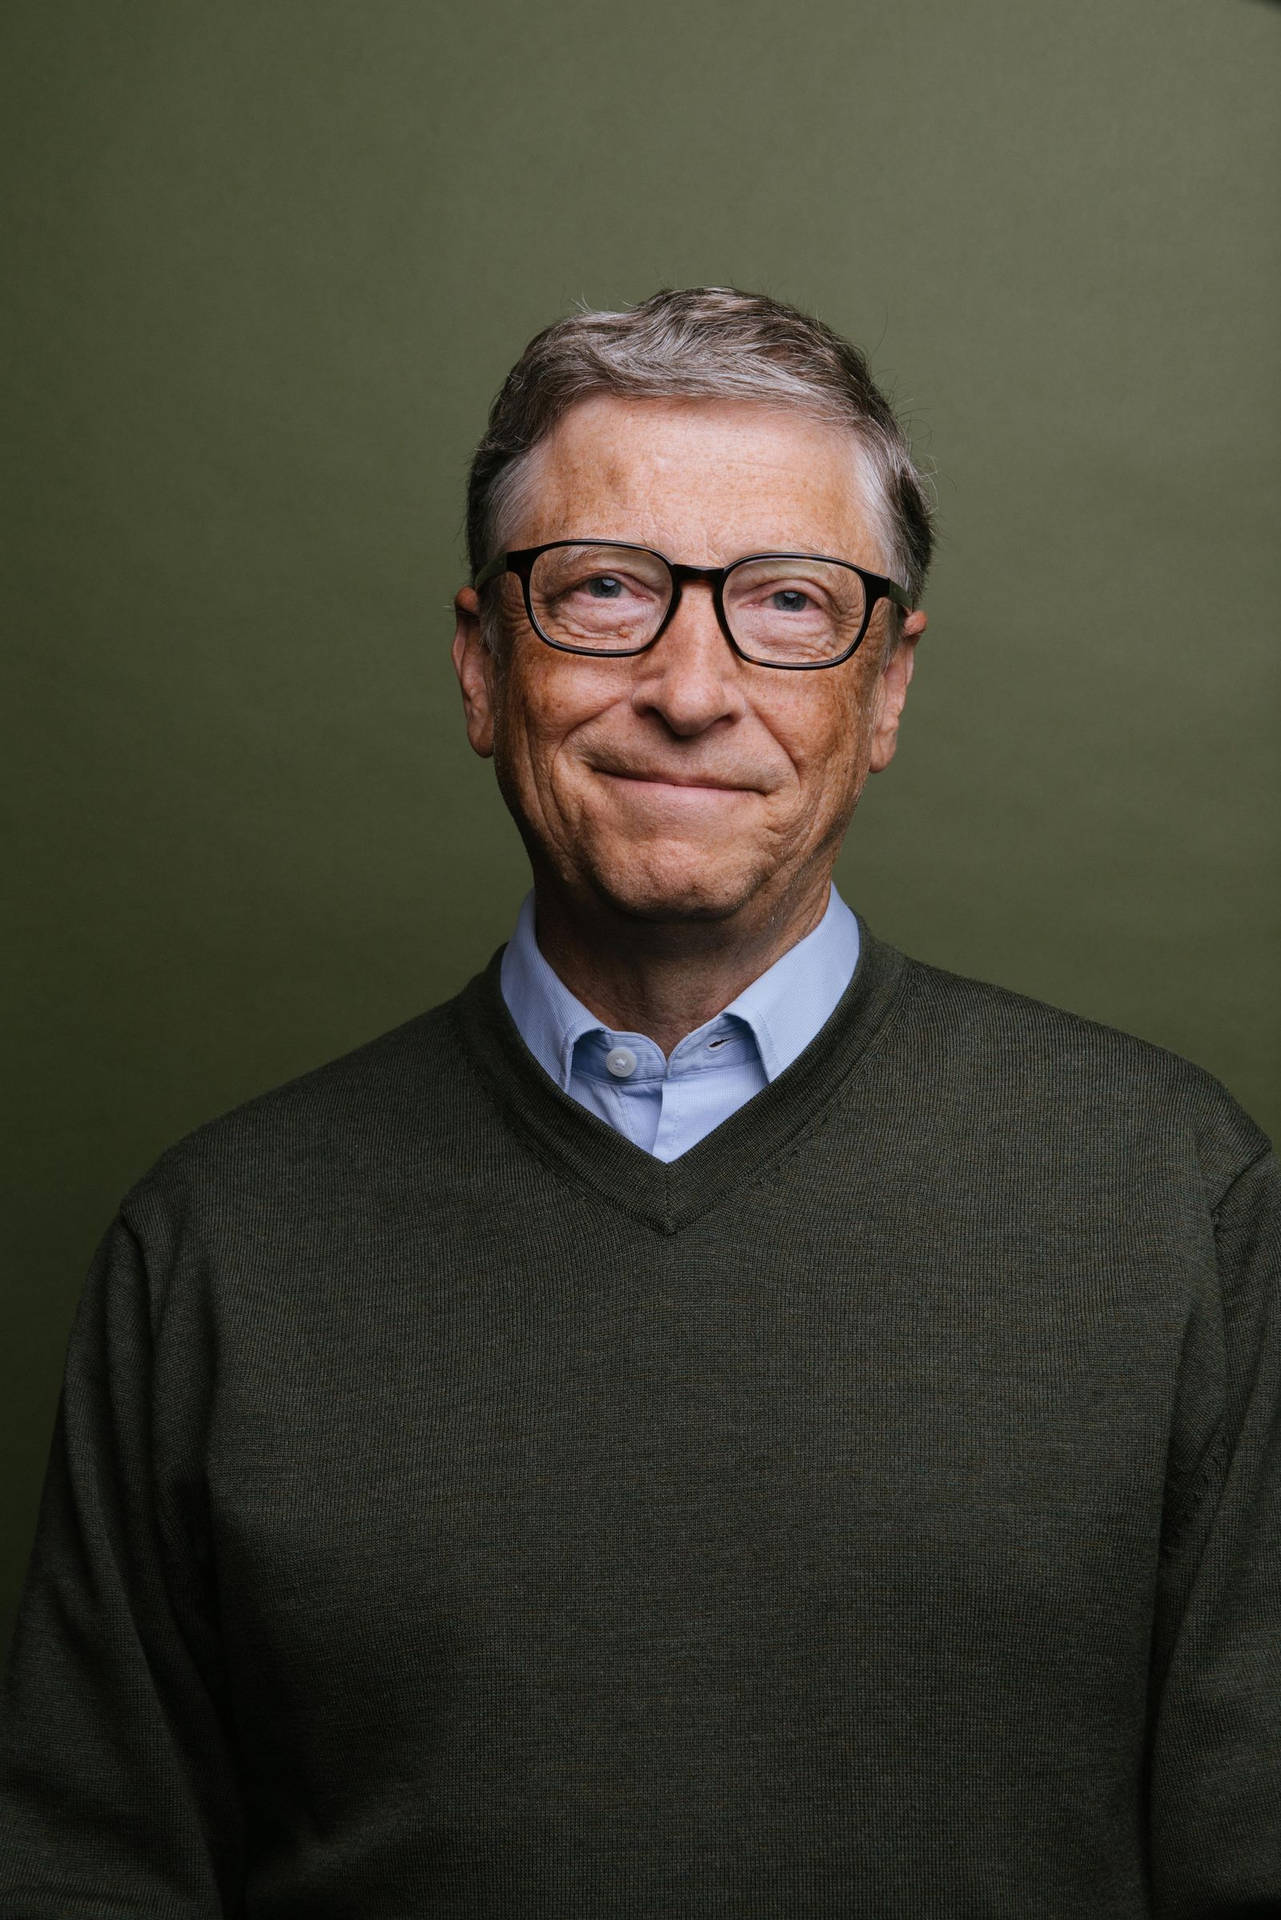 Bill Gates Photo Shoot Background